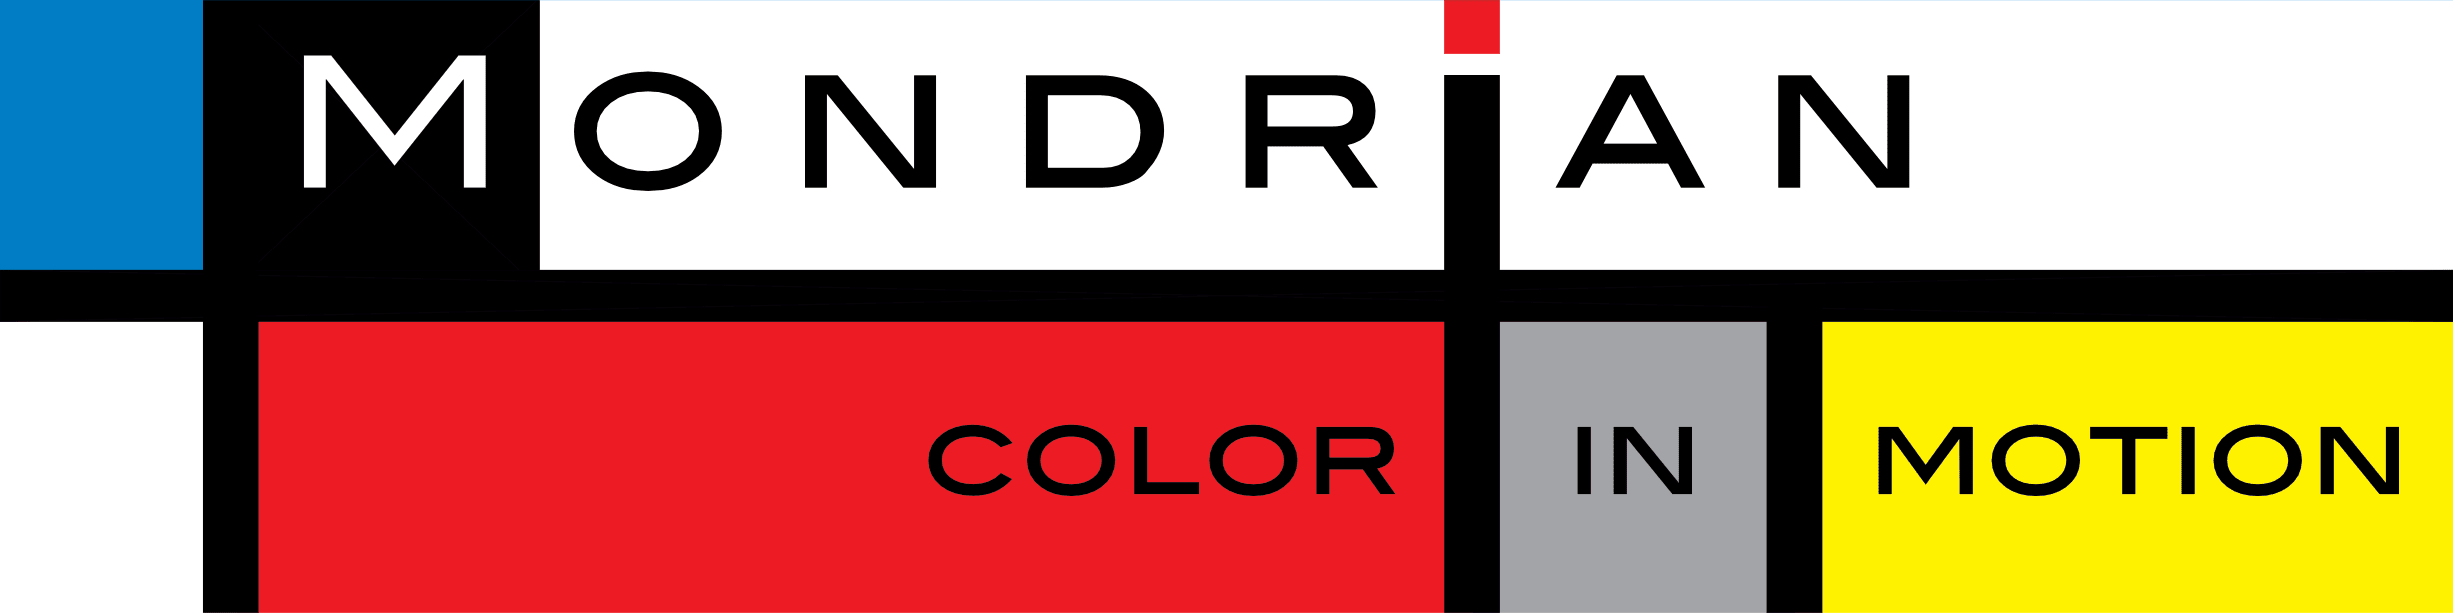 Mondrian: Color in Motion